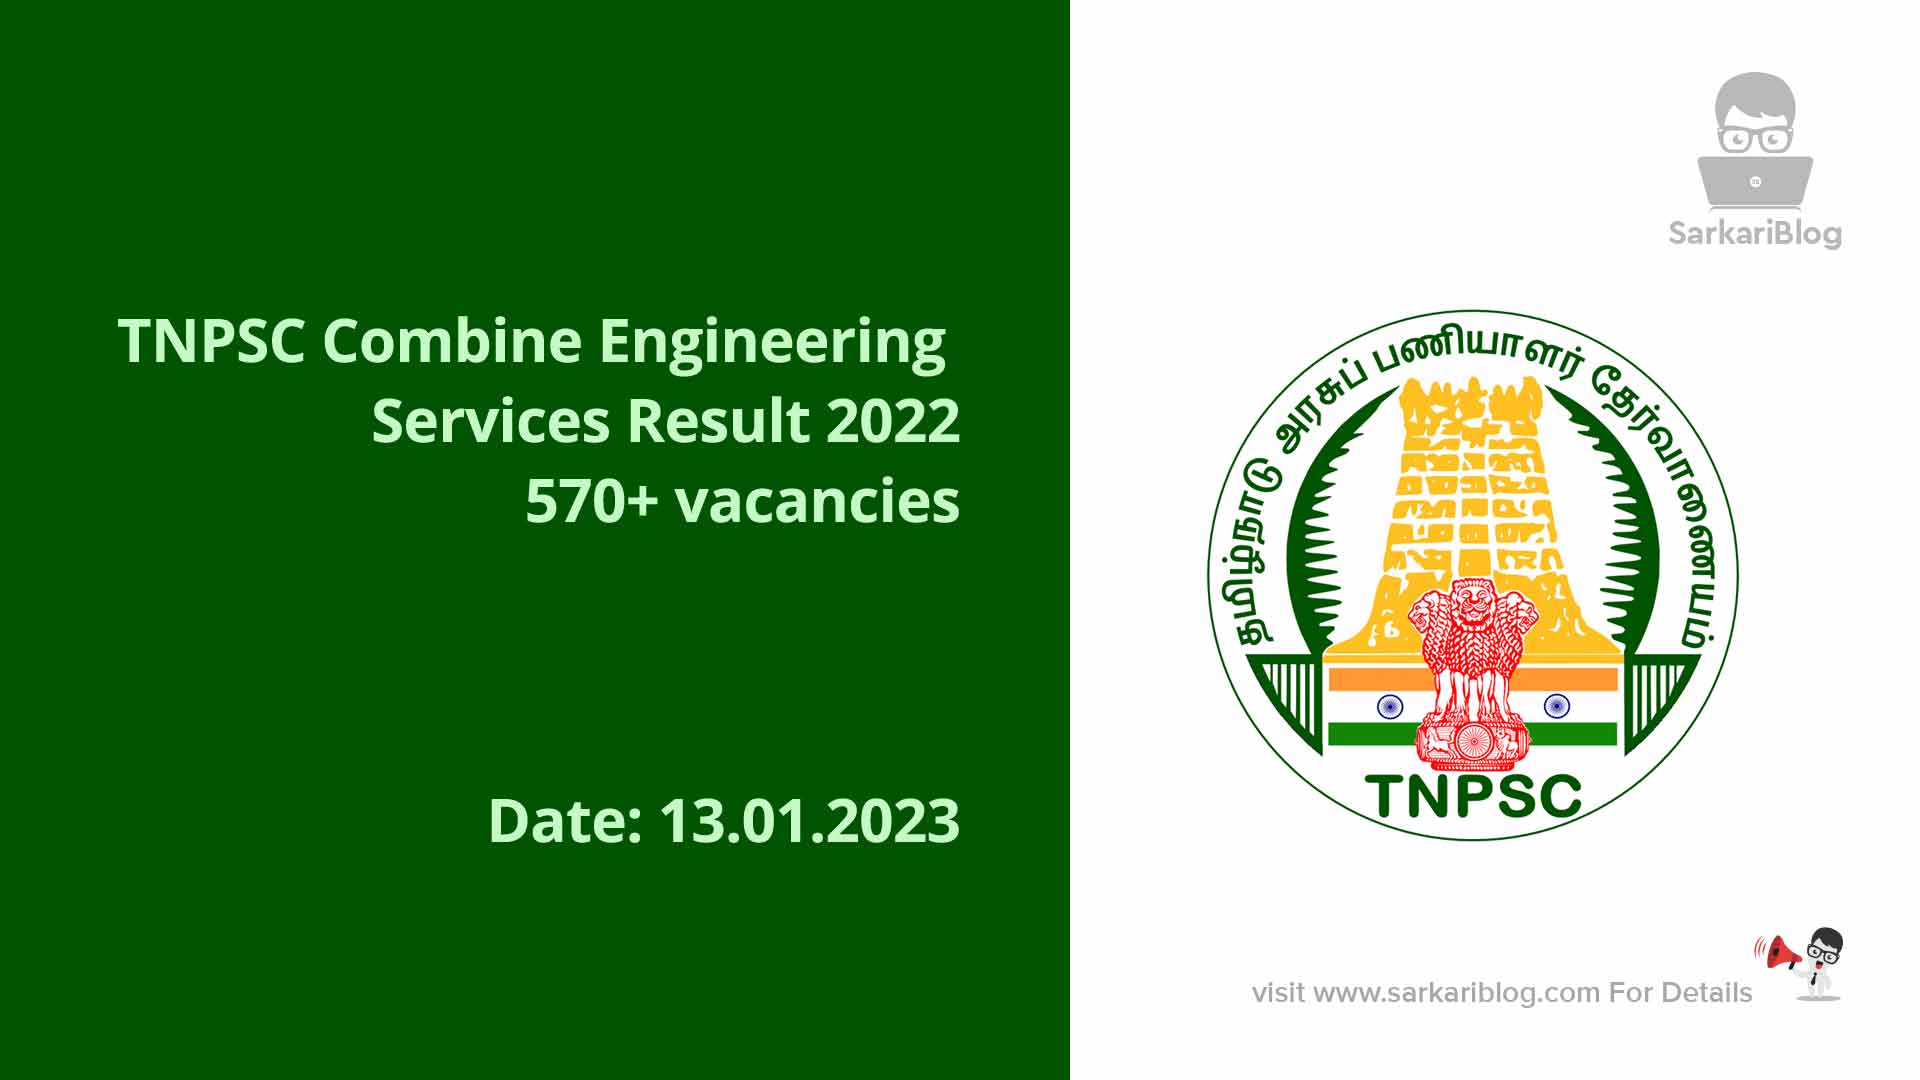 TNPSC Combine Engineering Services Result 2022